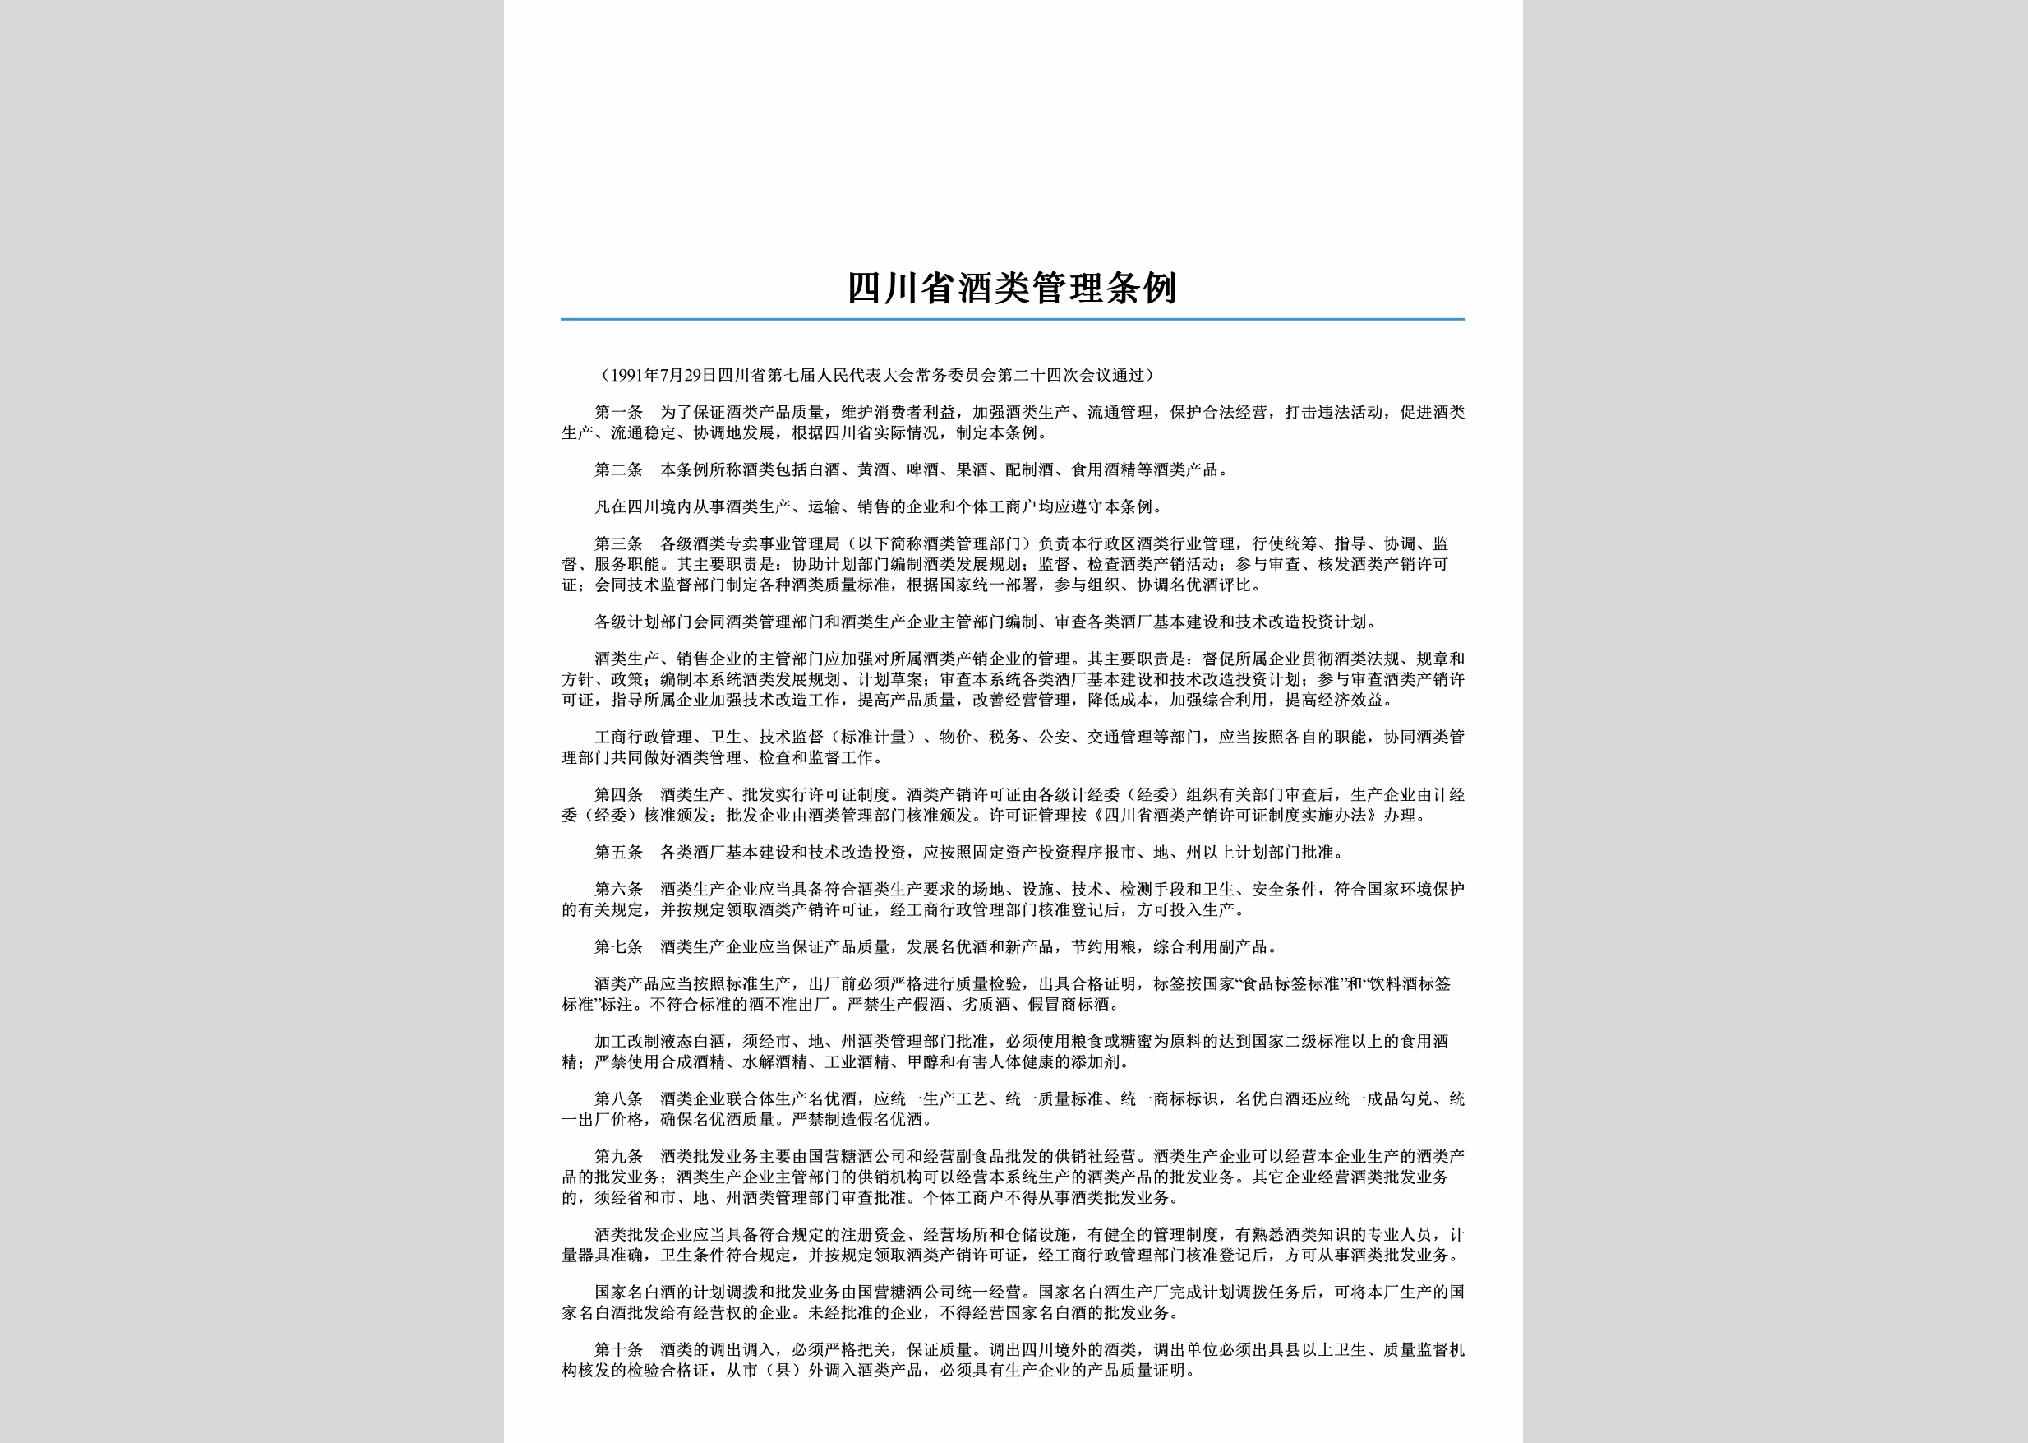 SC-JLGLTL-2006：四川省酒类管理条例